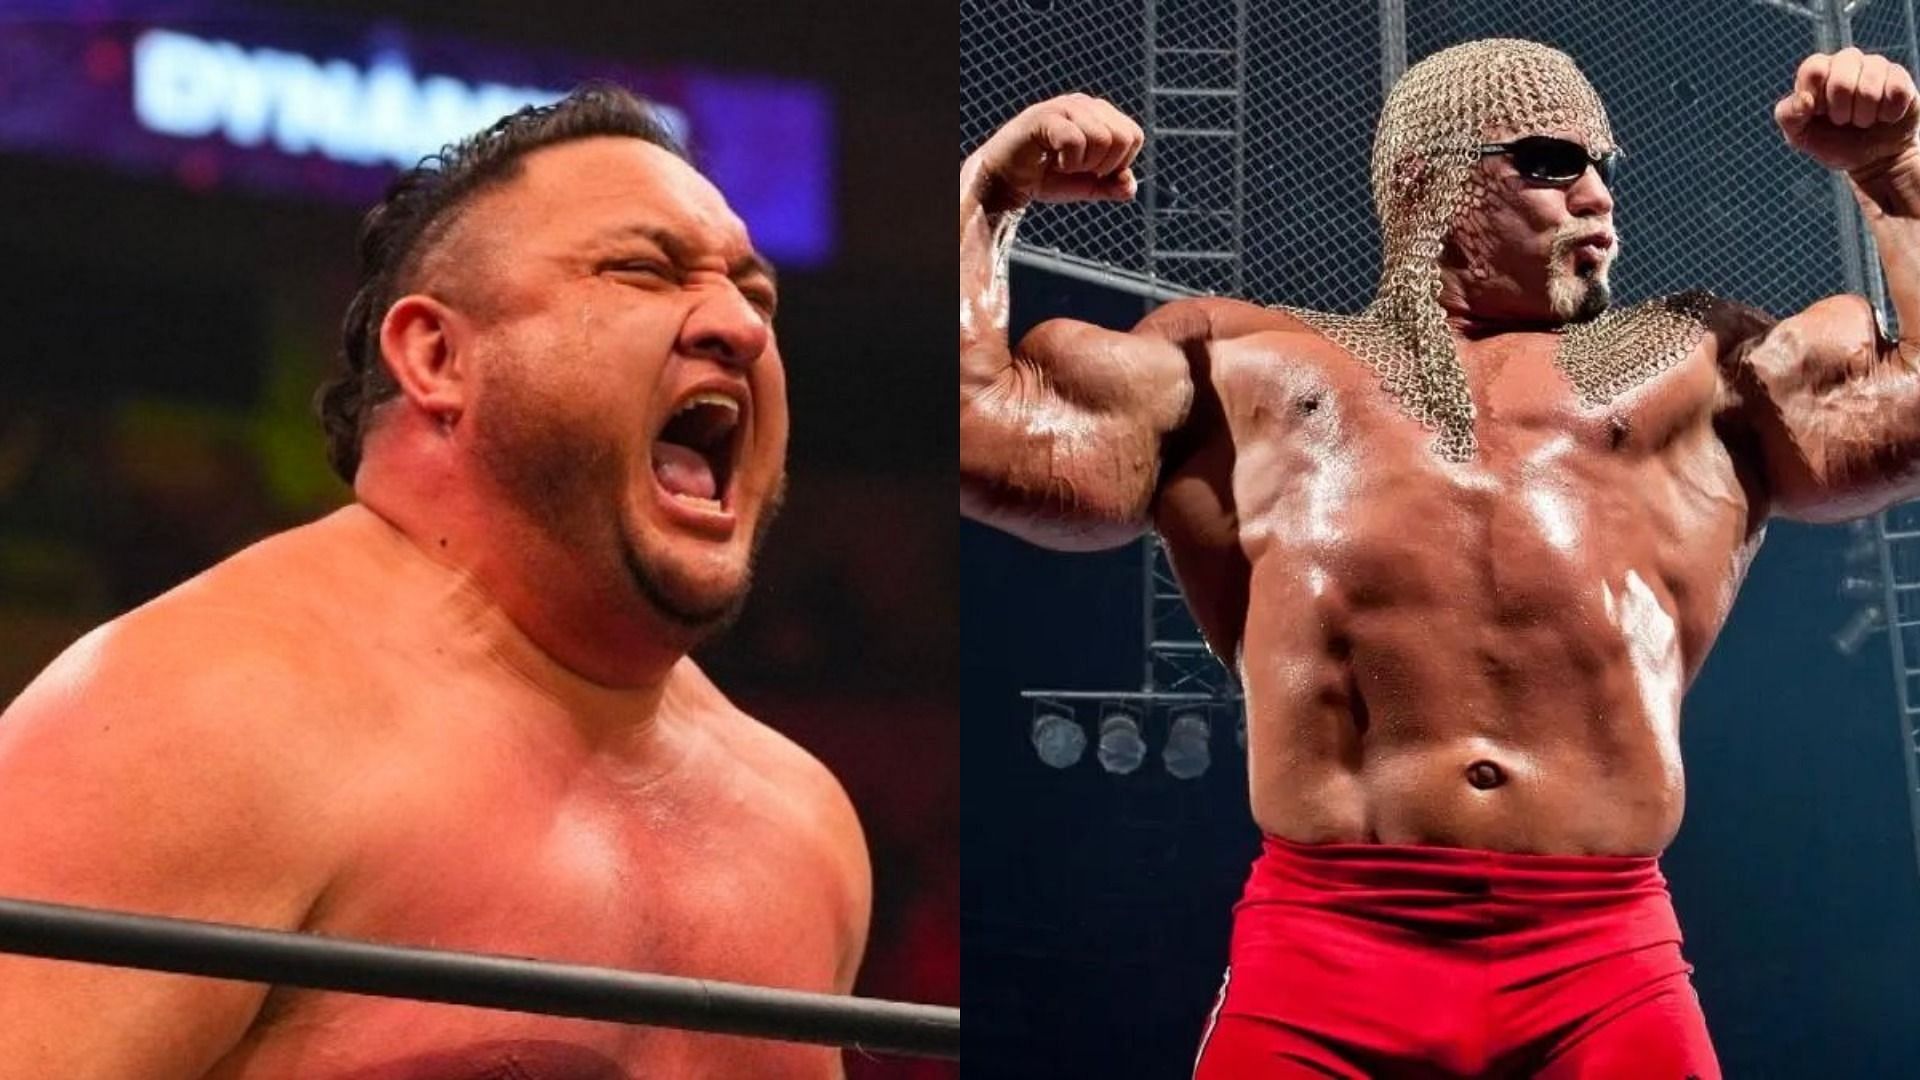 Samoa Joe and Scott Steiner were both big stars in TNA Wrestling